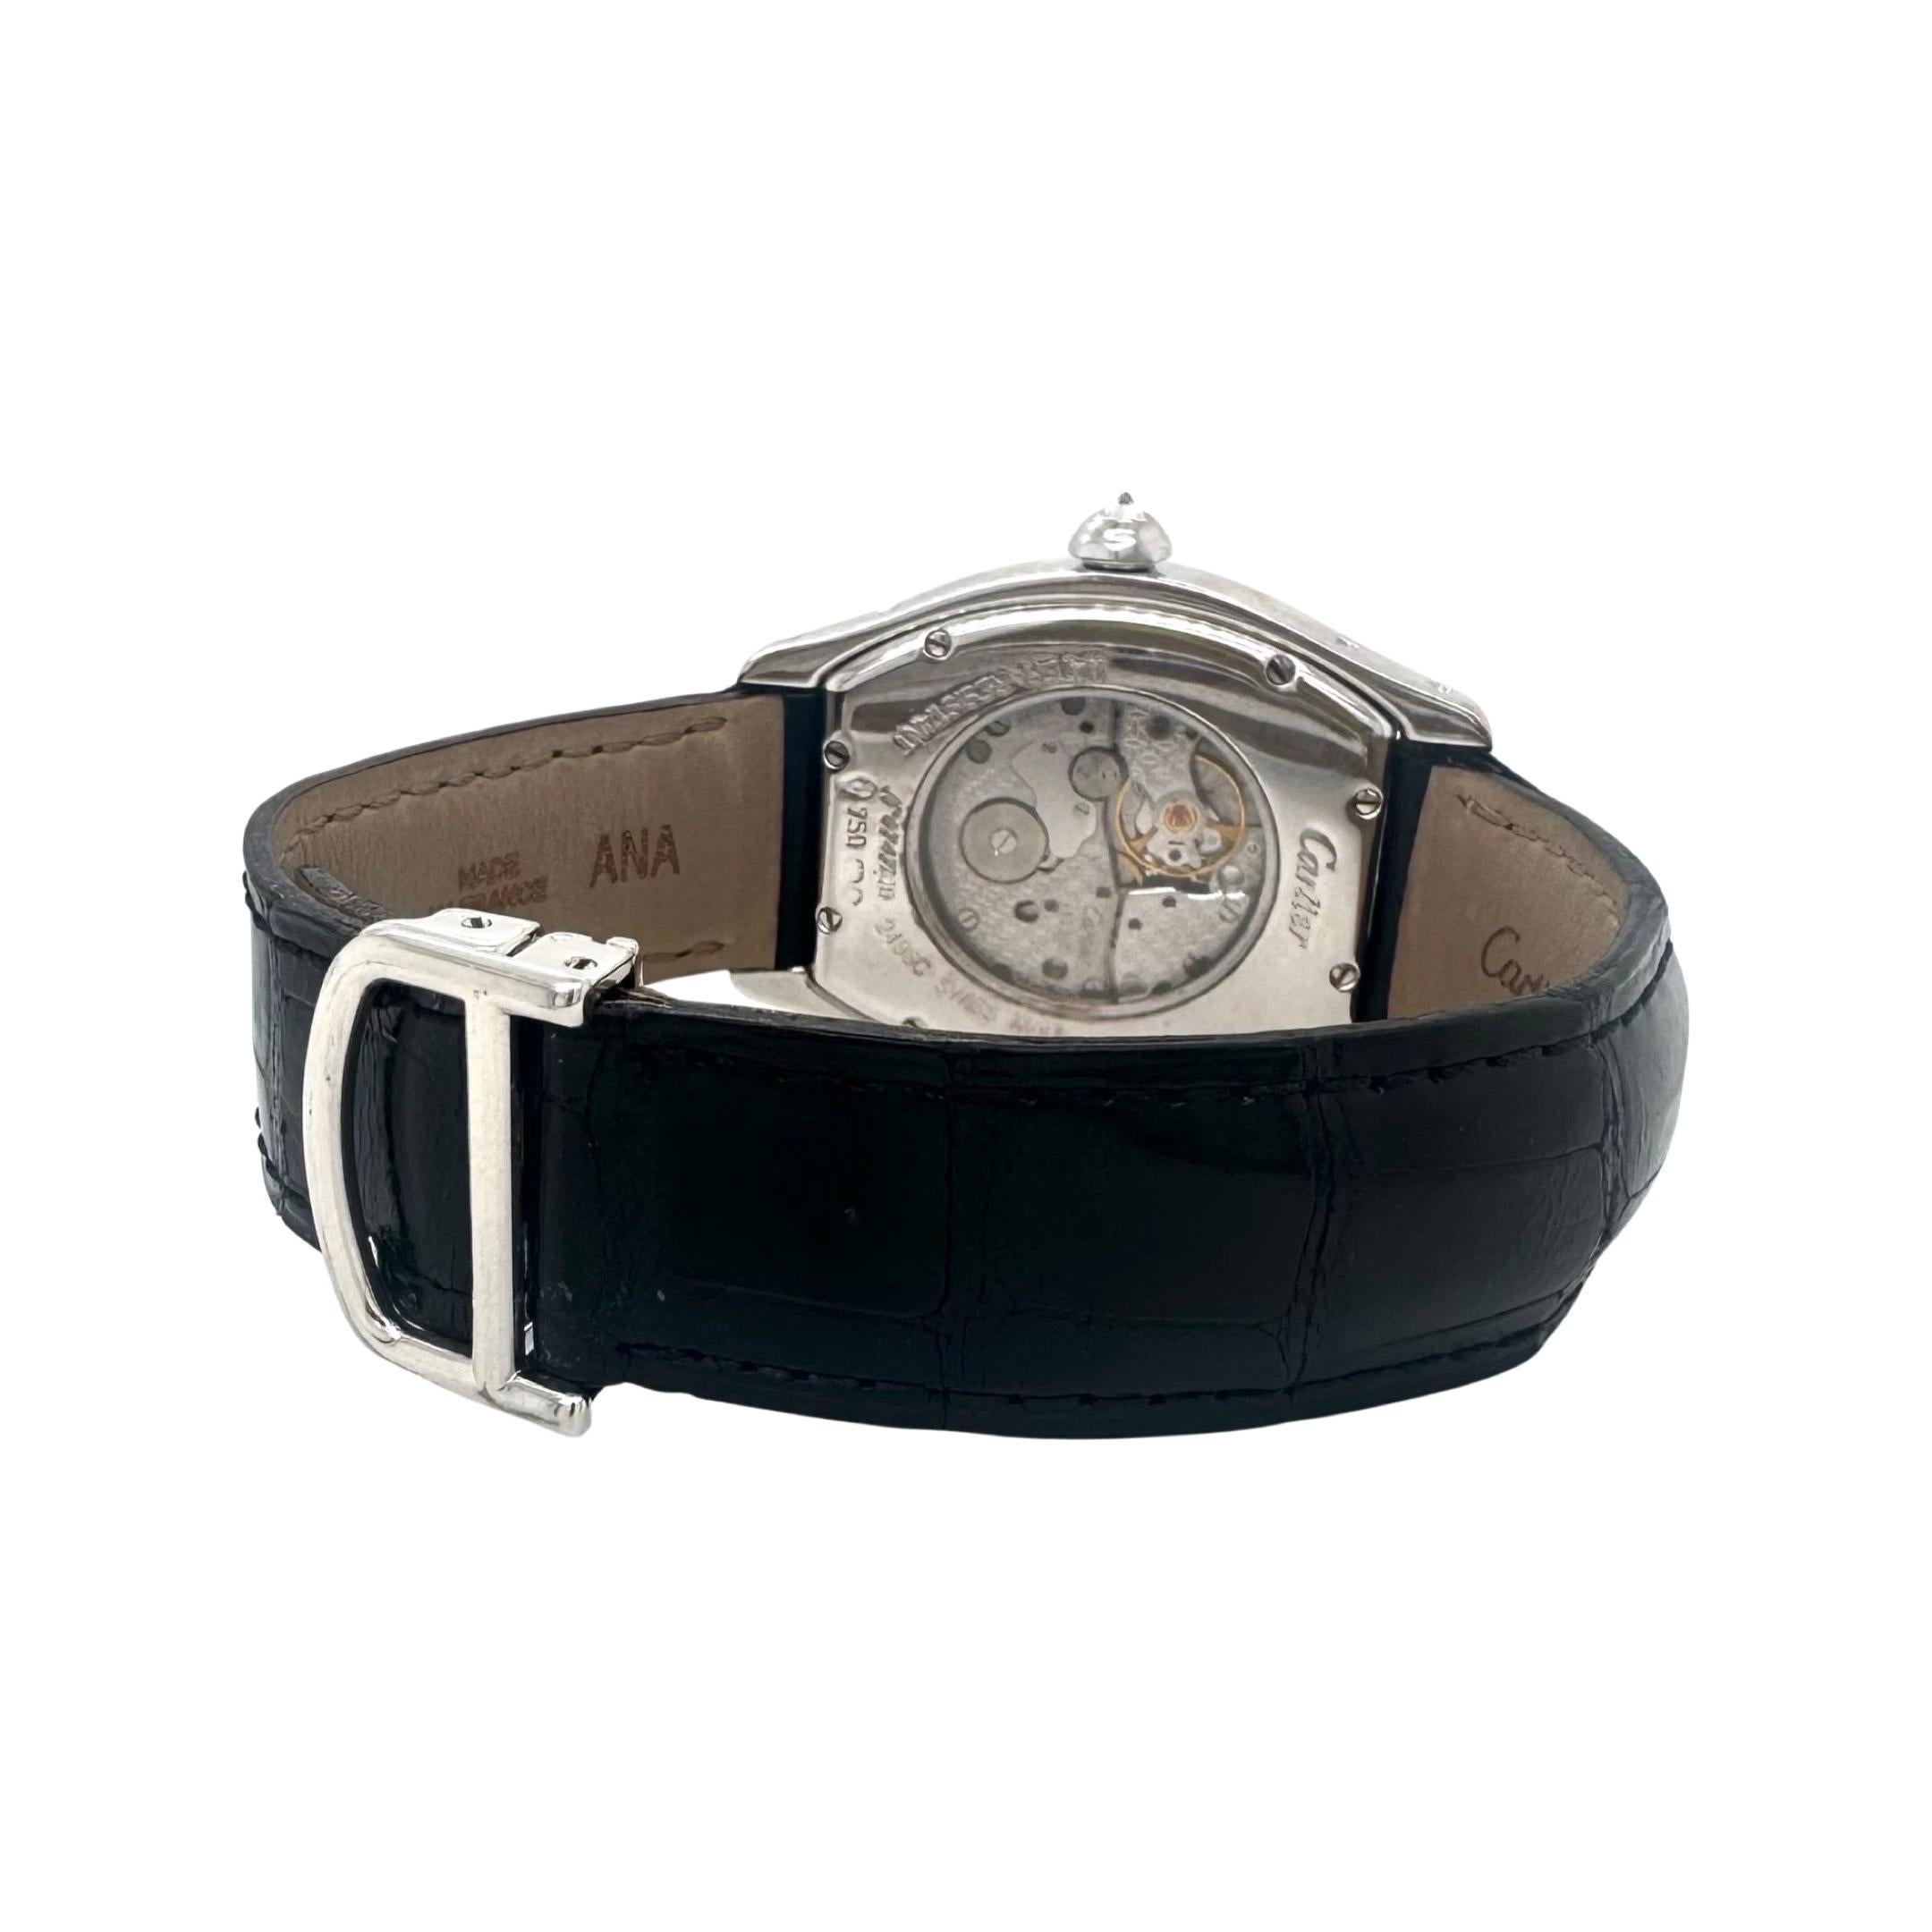 Baguette Cut Cartier Tortue Watch in 18k White Gold with Baguette Diamond Bezel